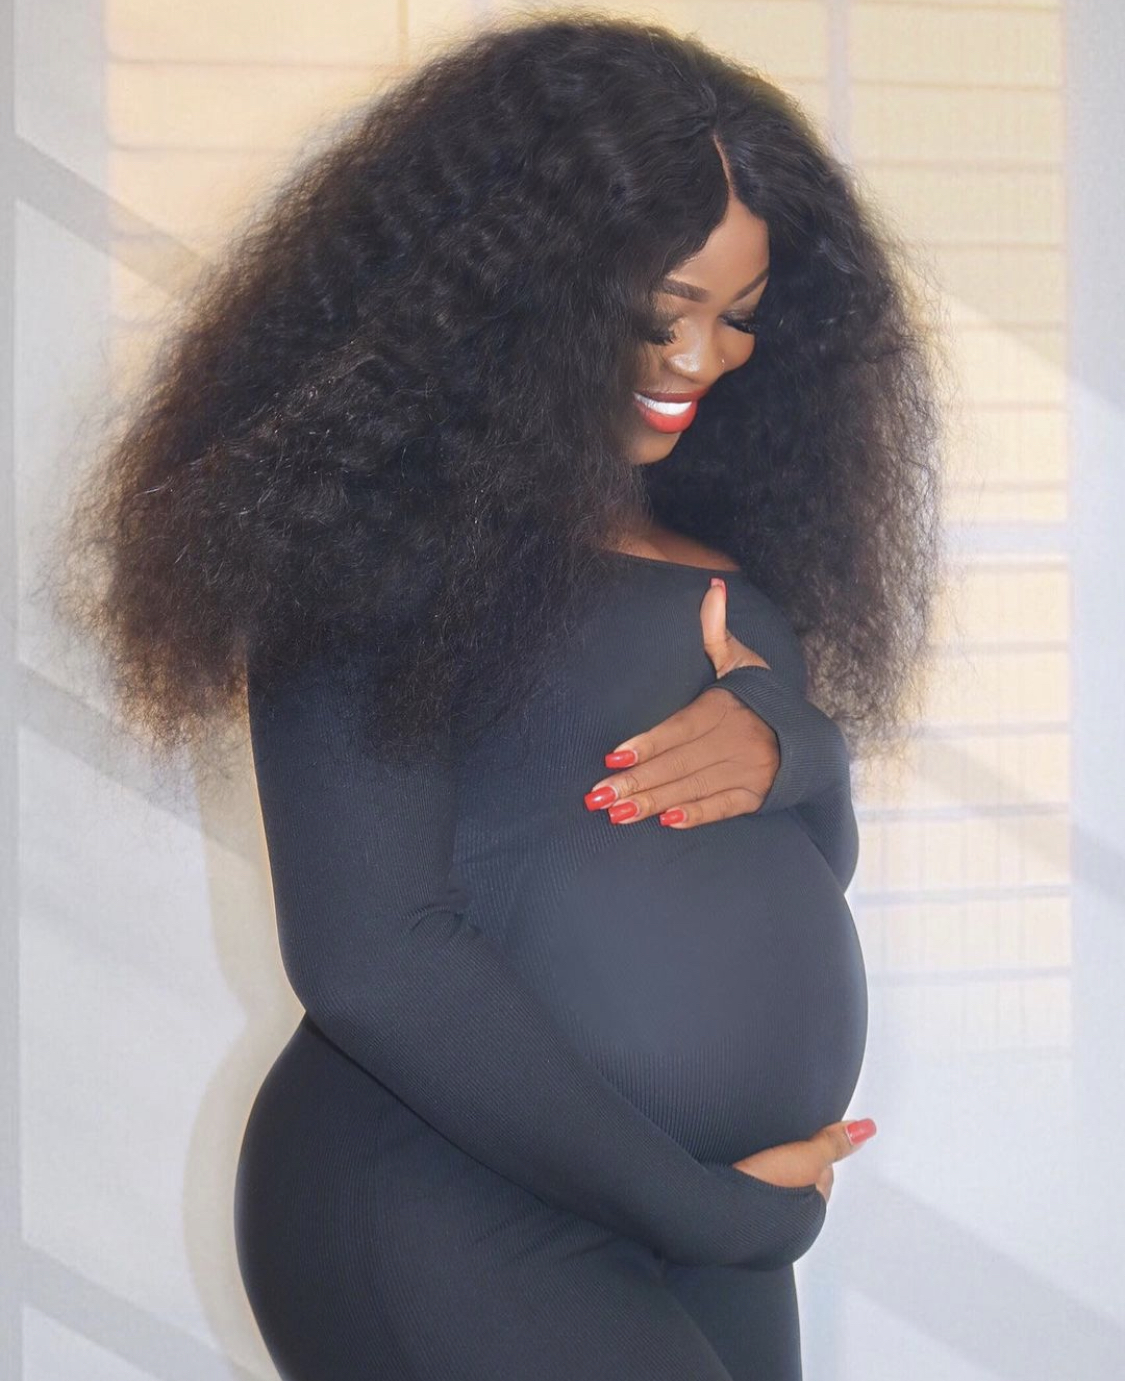 Your tummy was flat days ago - Fans Query BBNaija’s Ka3na as she announces pregnancy with huge baby bump [photos]